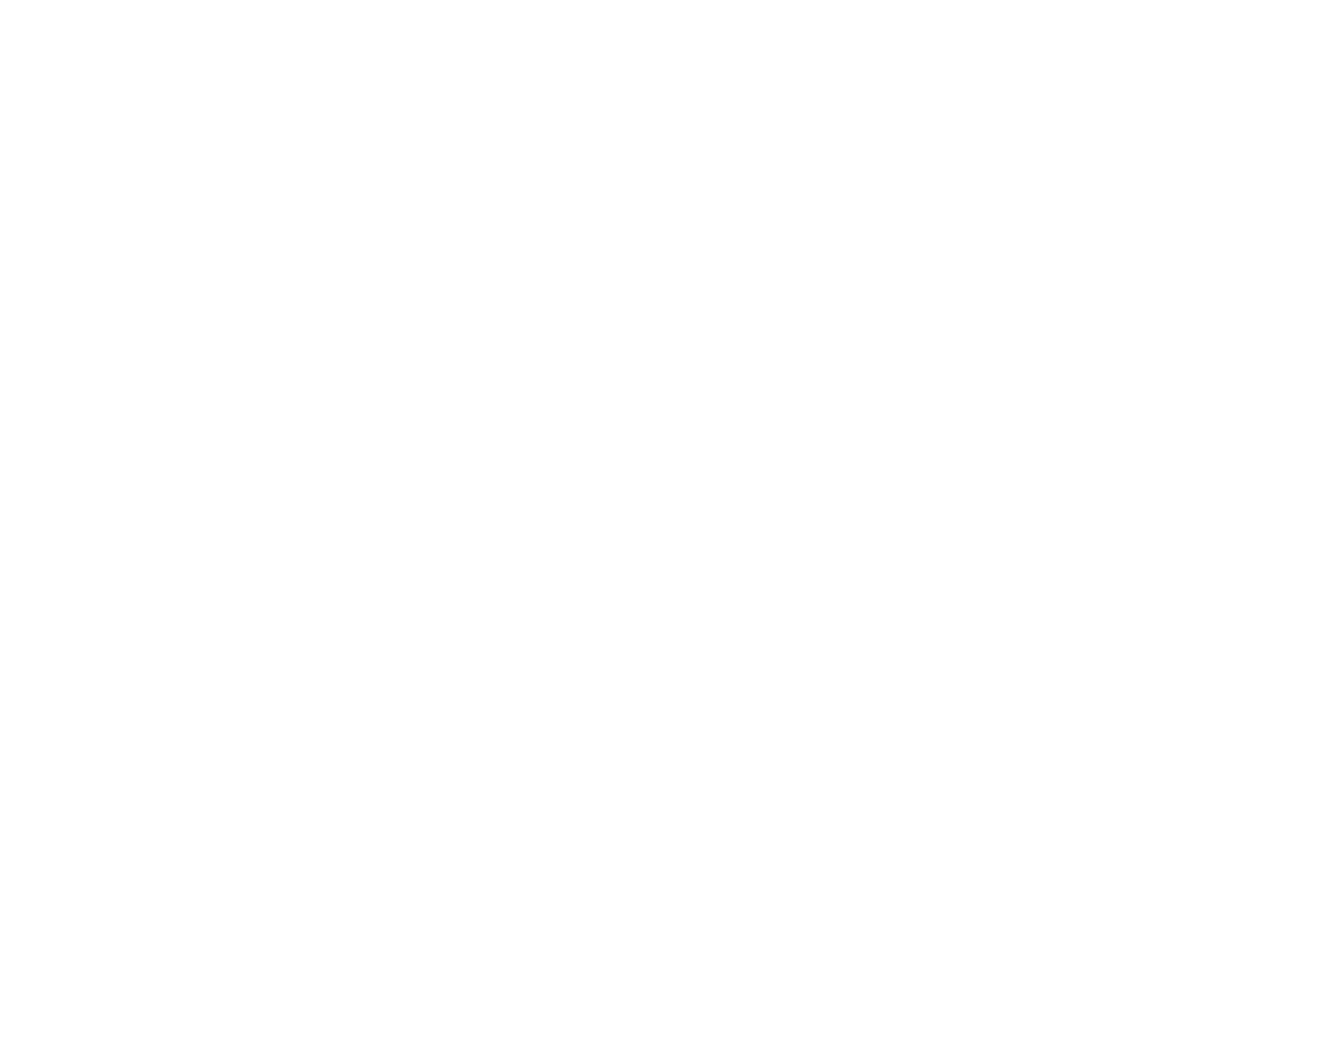 New_York_Times_logo_variation copy.png